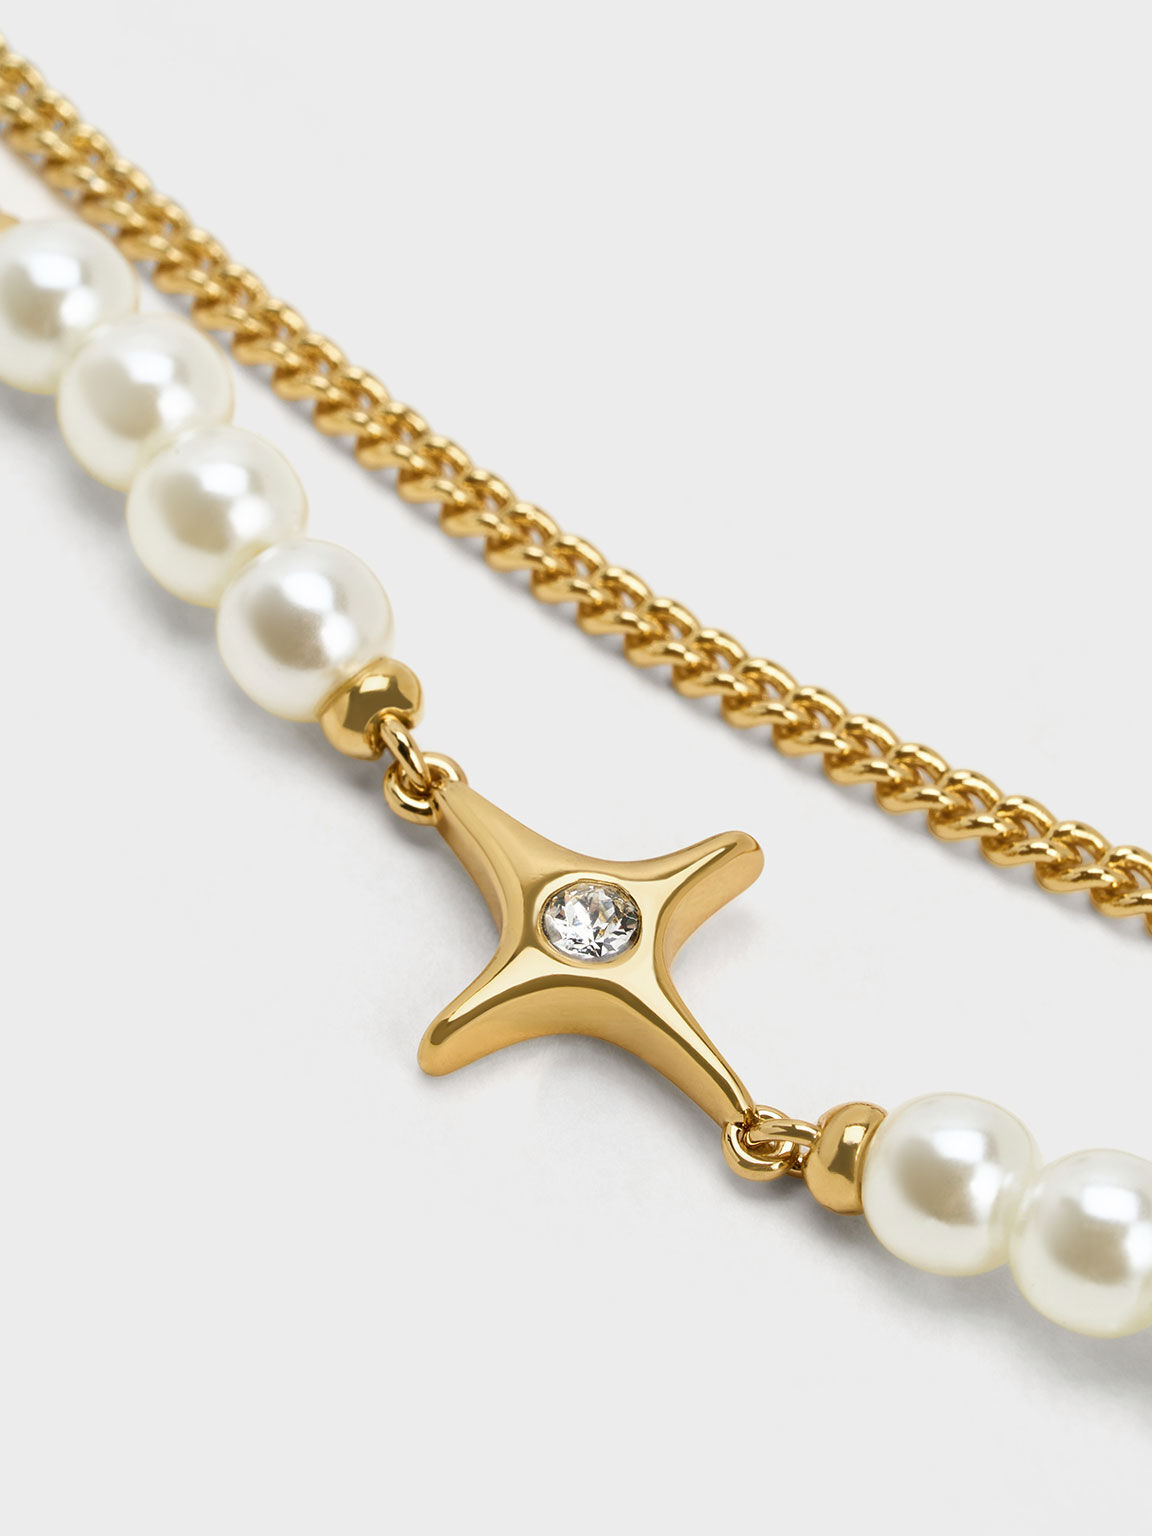 Women's steel bracelet gilded with fine gold double chain Valentine's heart